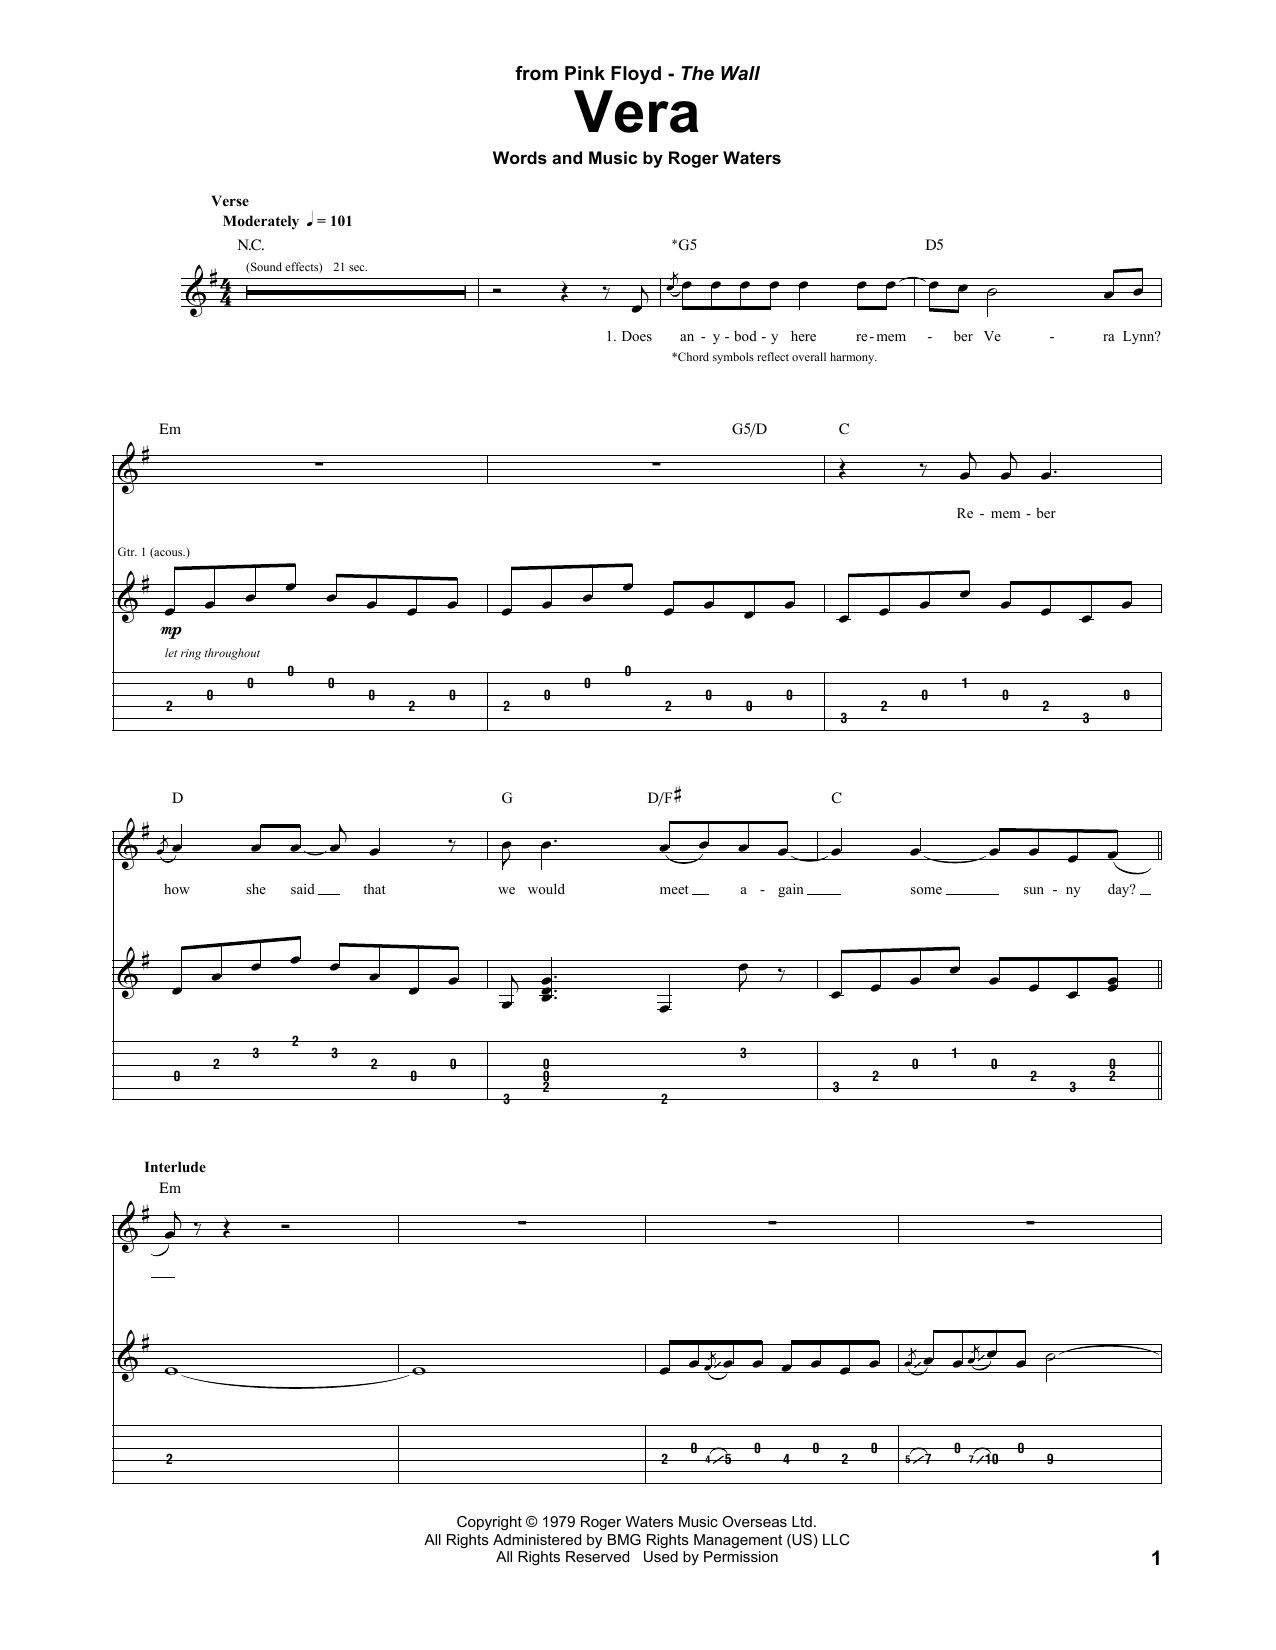 Pink Floyd Vera Sheet Music Notes & Chords for Guitar Tab - Download or Print PDF